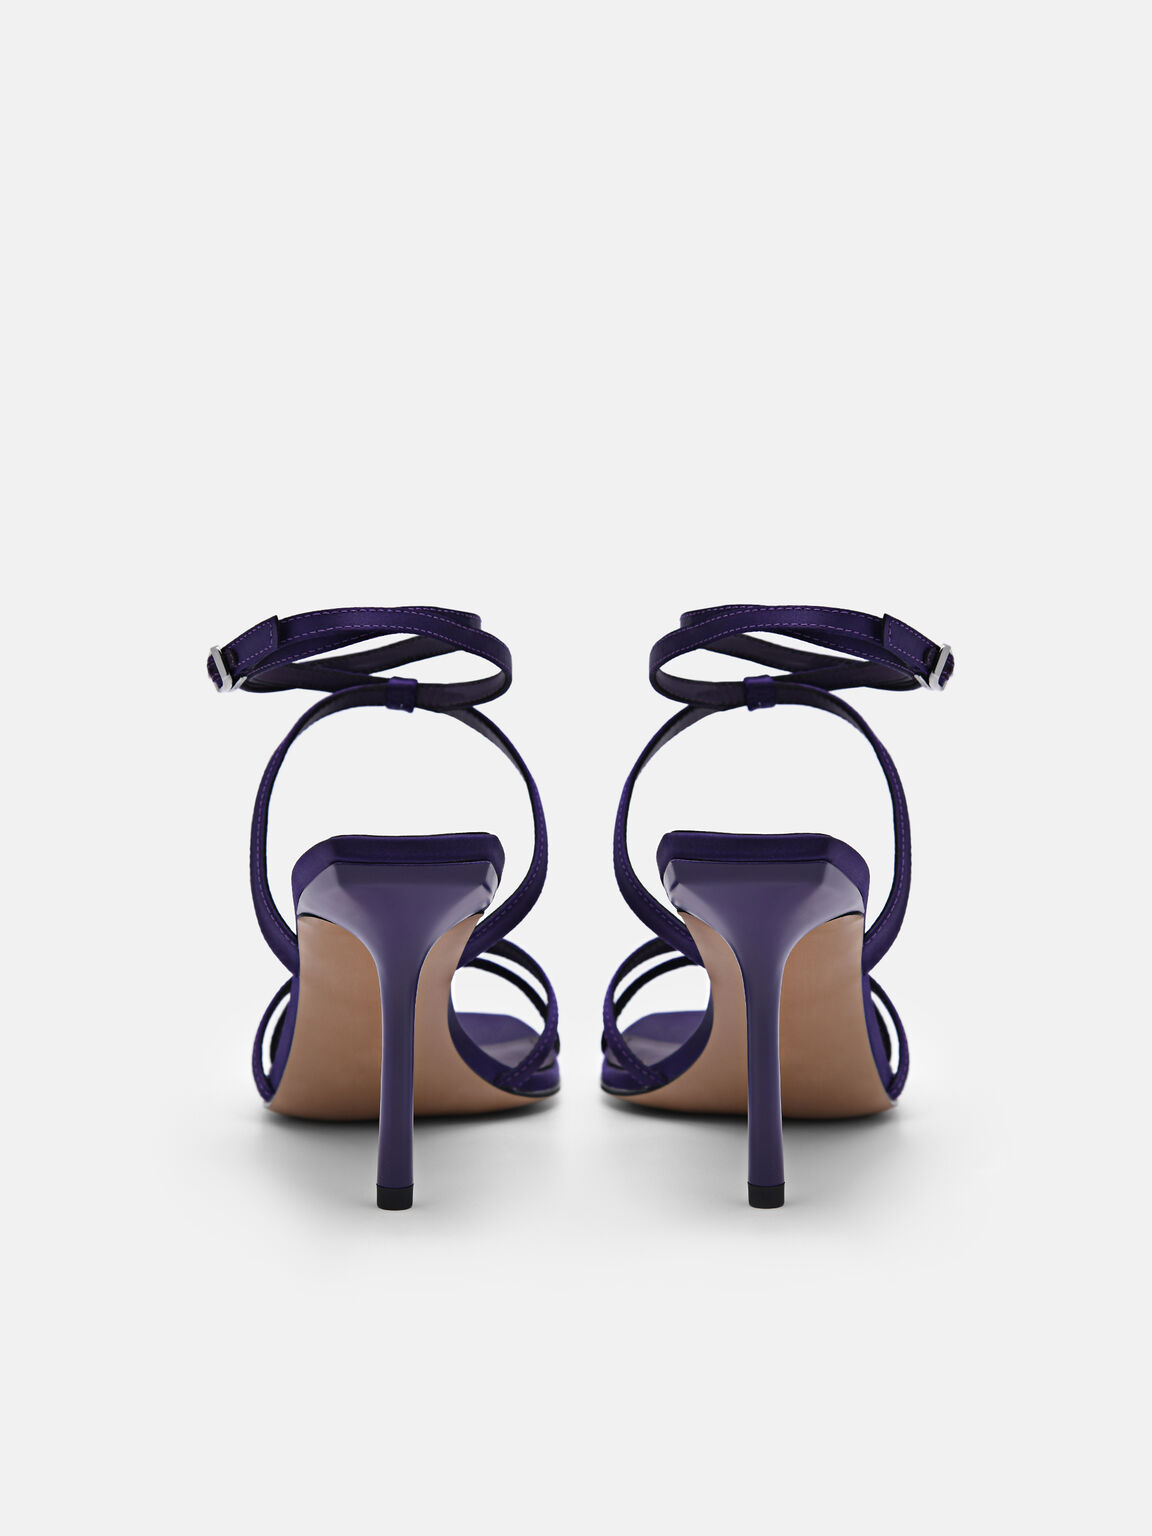 Sofia Leather Heel Sandals, Dark Purple, hi-res